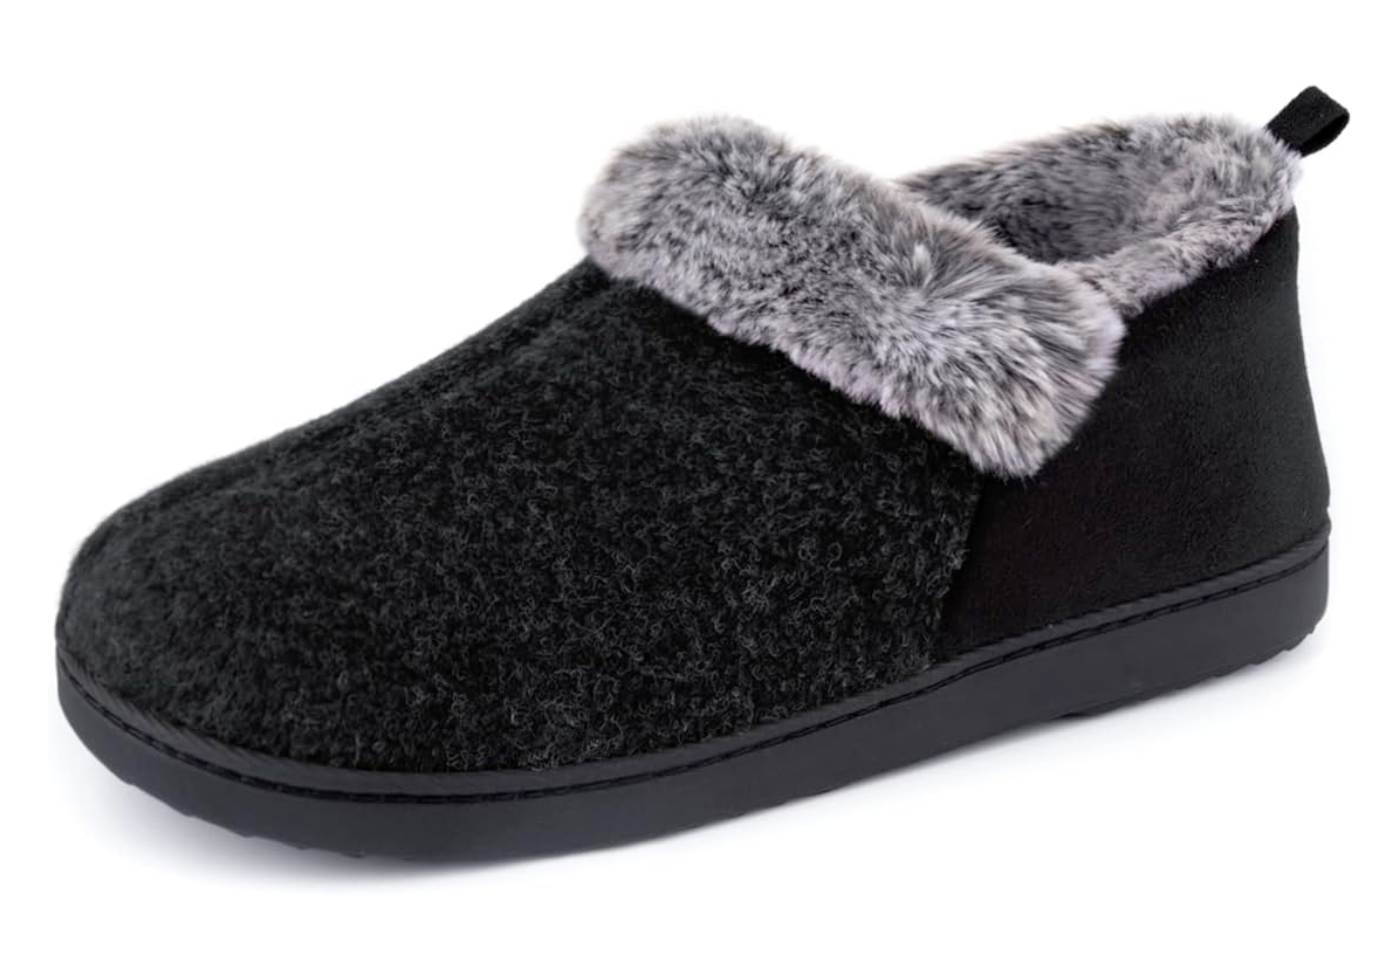 Get Set Globe Top 10 Best Comfy Slippers Like Shoes - ULTRAIDEAS Women's Cozy Memory Foam Slippers with Warm Plush Faux Fur Lining